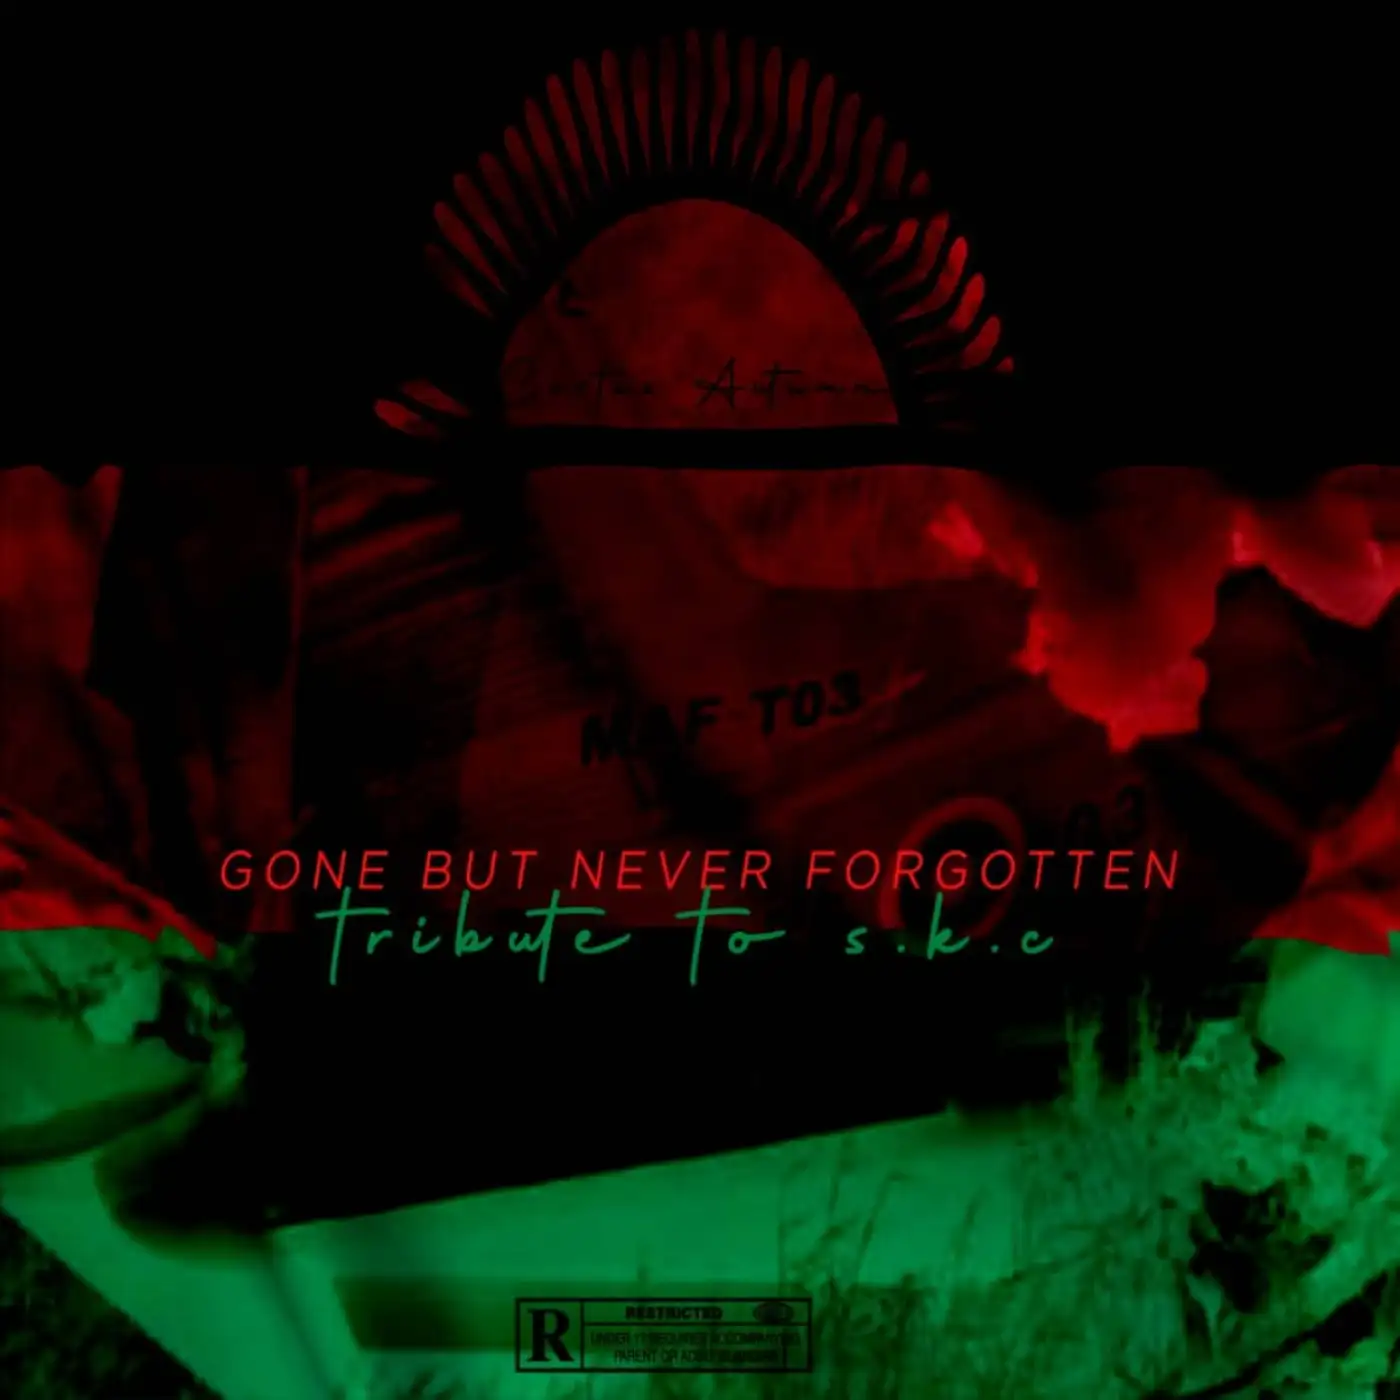 Cortez Autumn-Cortez Autumn - Gone But Never Forgotten (Tribute To Saulos Chilima)-song artwork cover